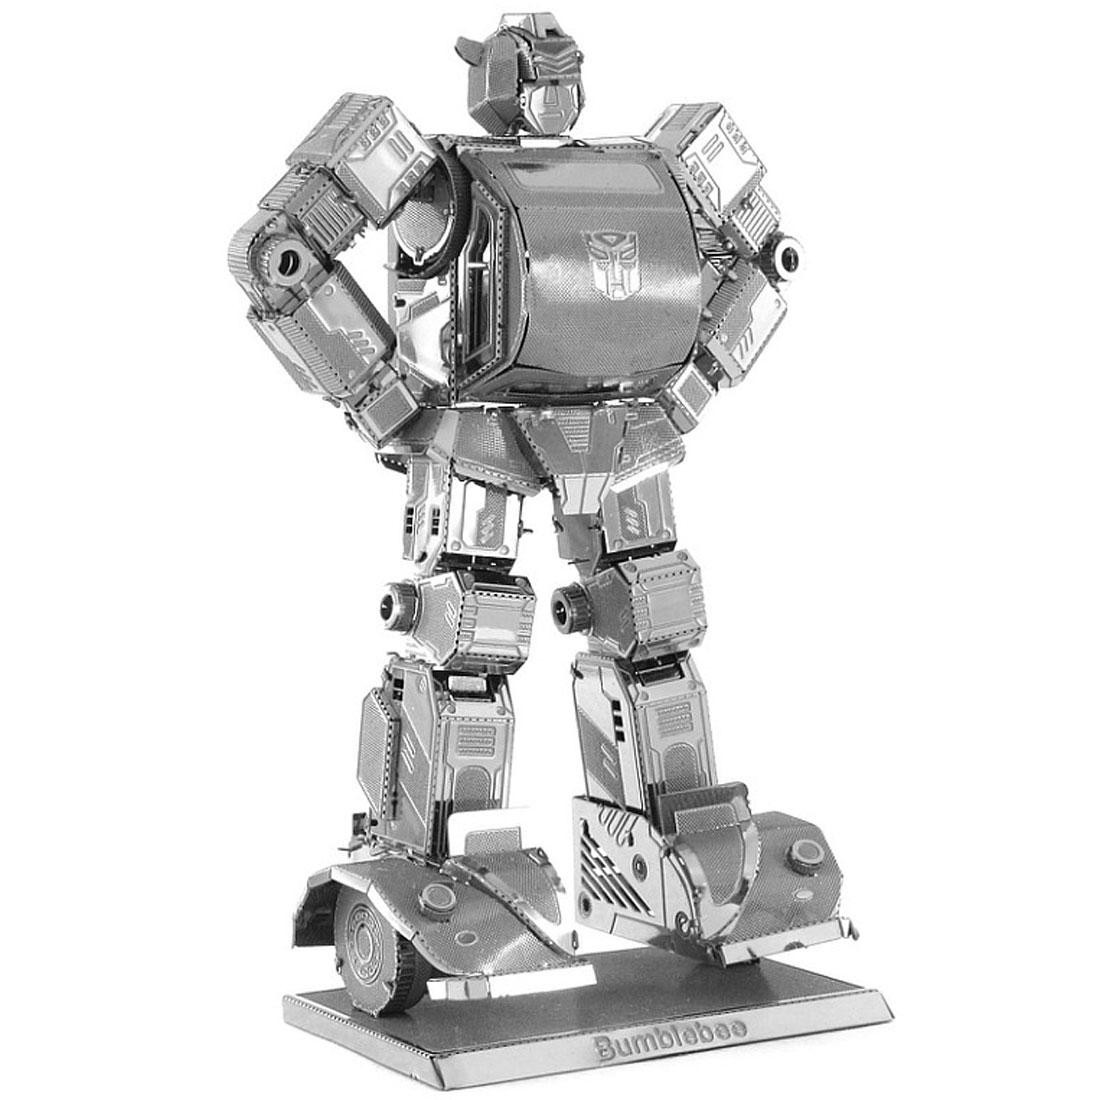 Transformers Bumblebee for sale online Fascinations Metal Earth 3D Laser Cut Model 